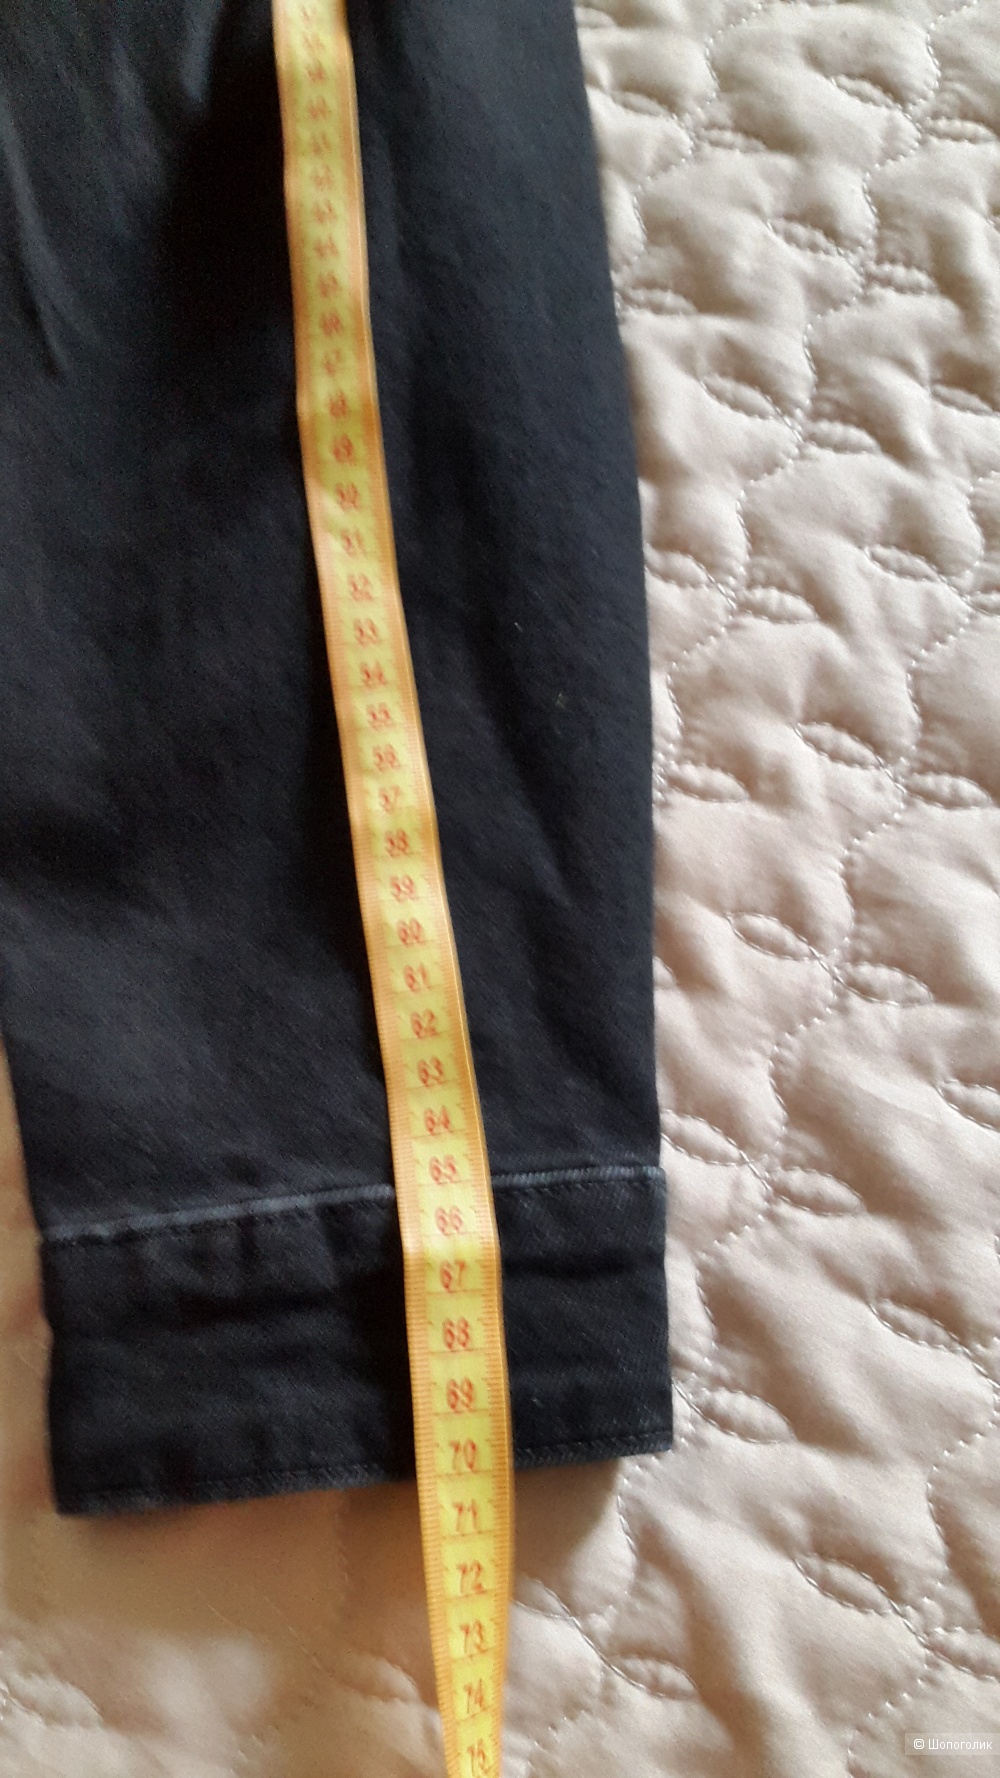 Джинсовая куртка М-L на 46/48 Massimo Dutti + подарок